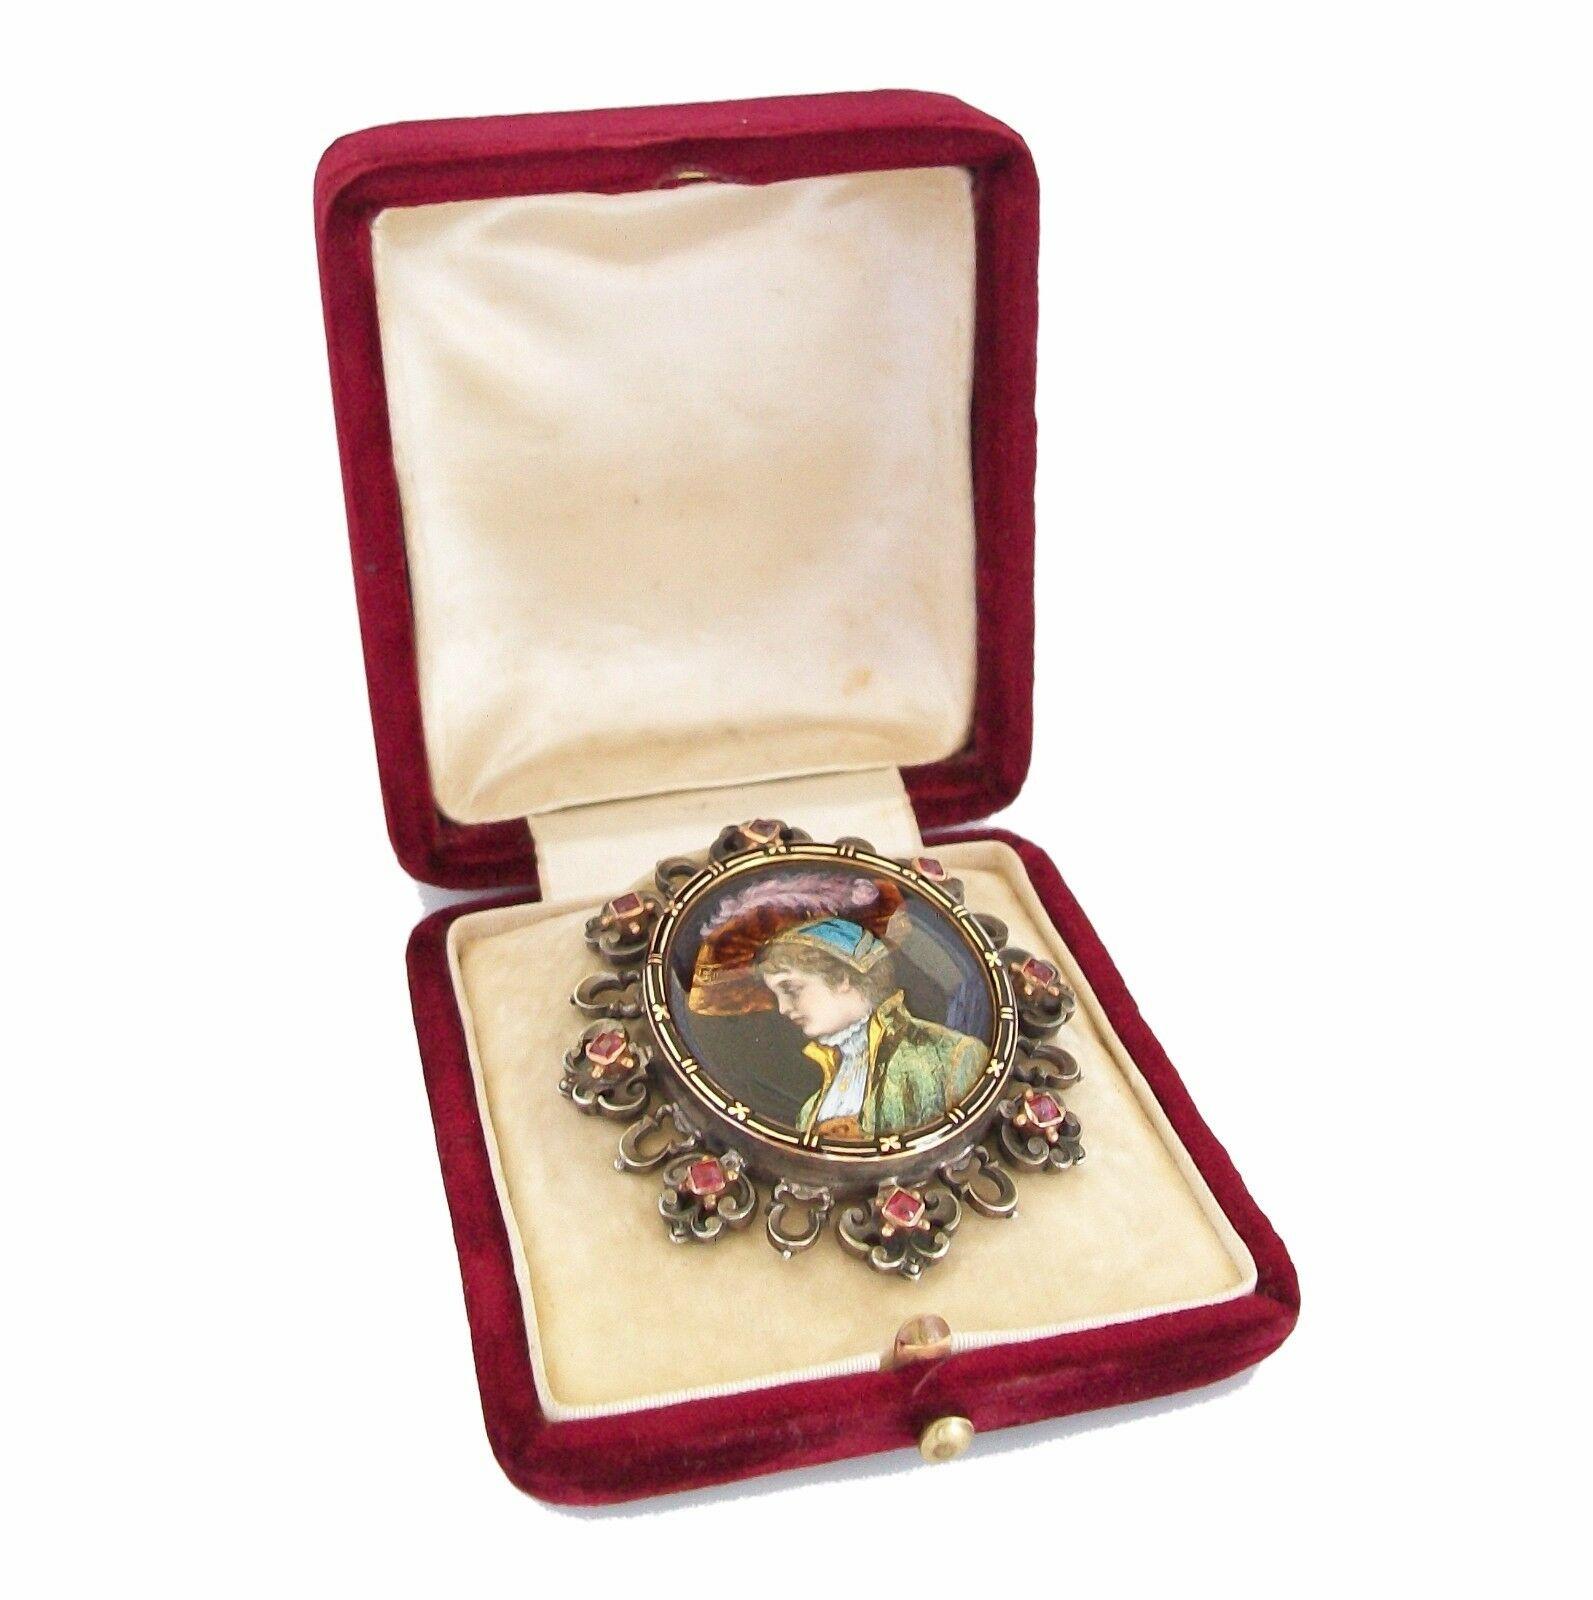 Round Cut Renaissance Revival Limoges Enamel Brooch, Rubellite, Gold & Silver, C. 1892 For Sale